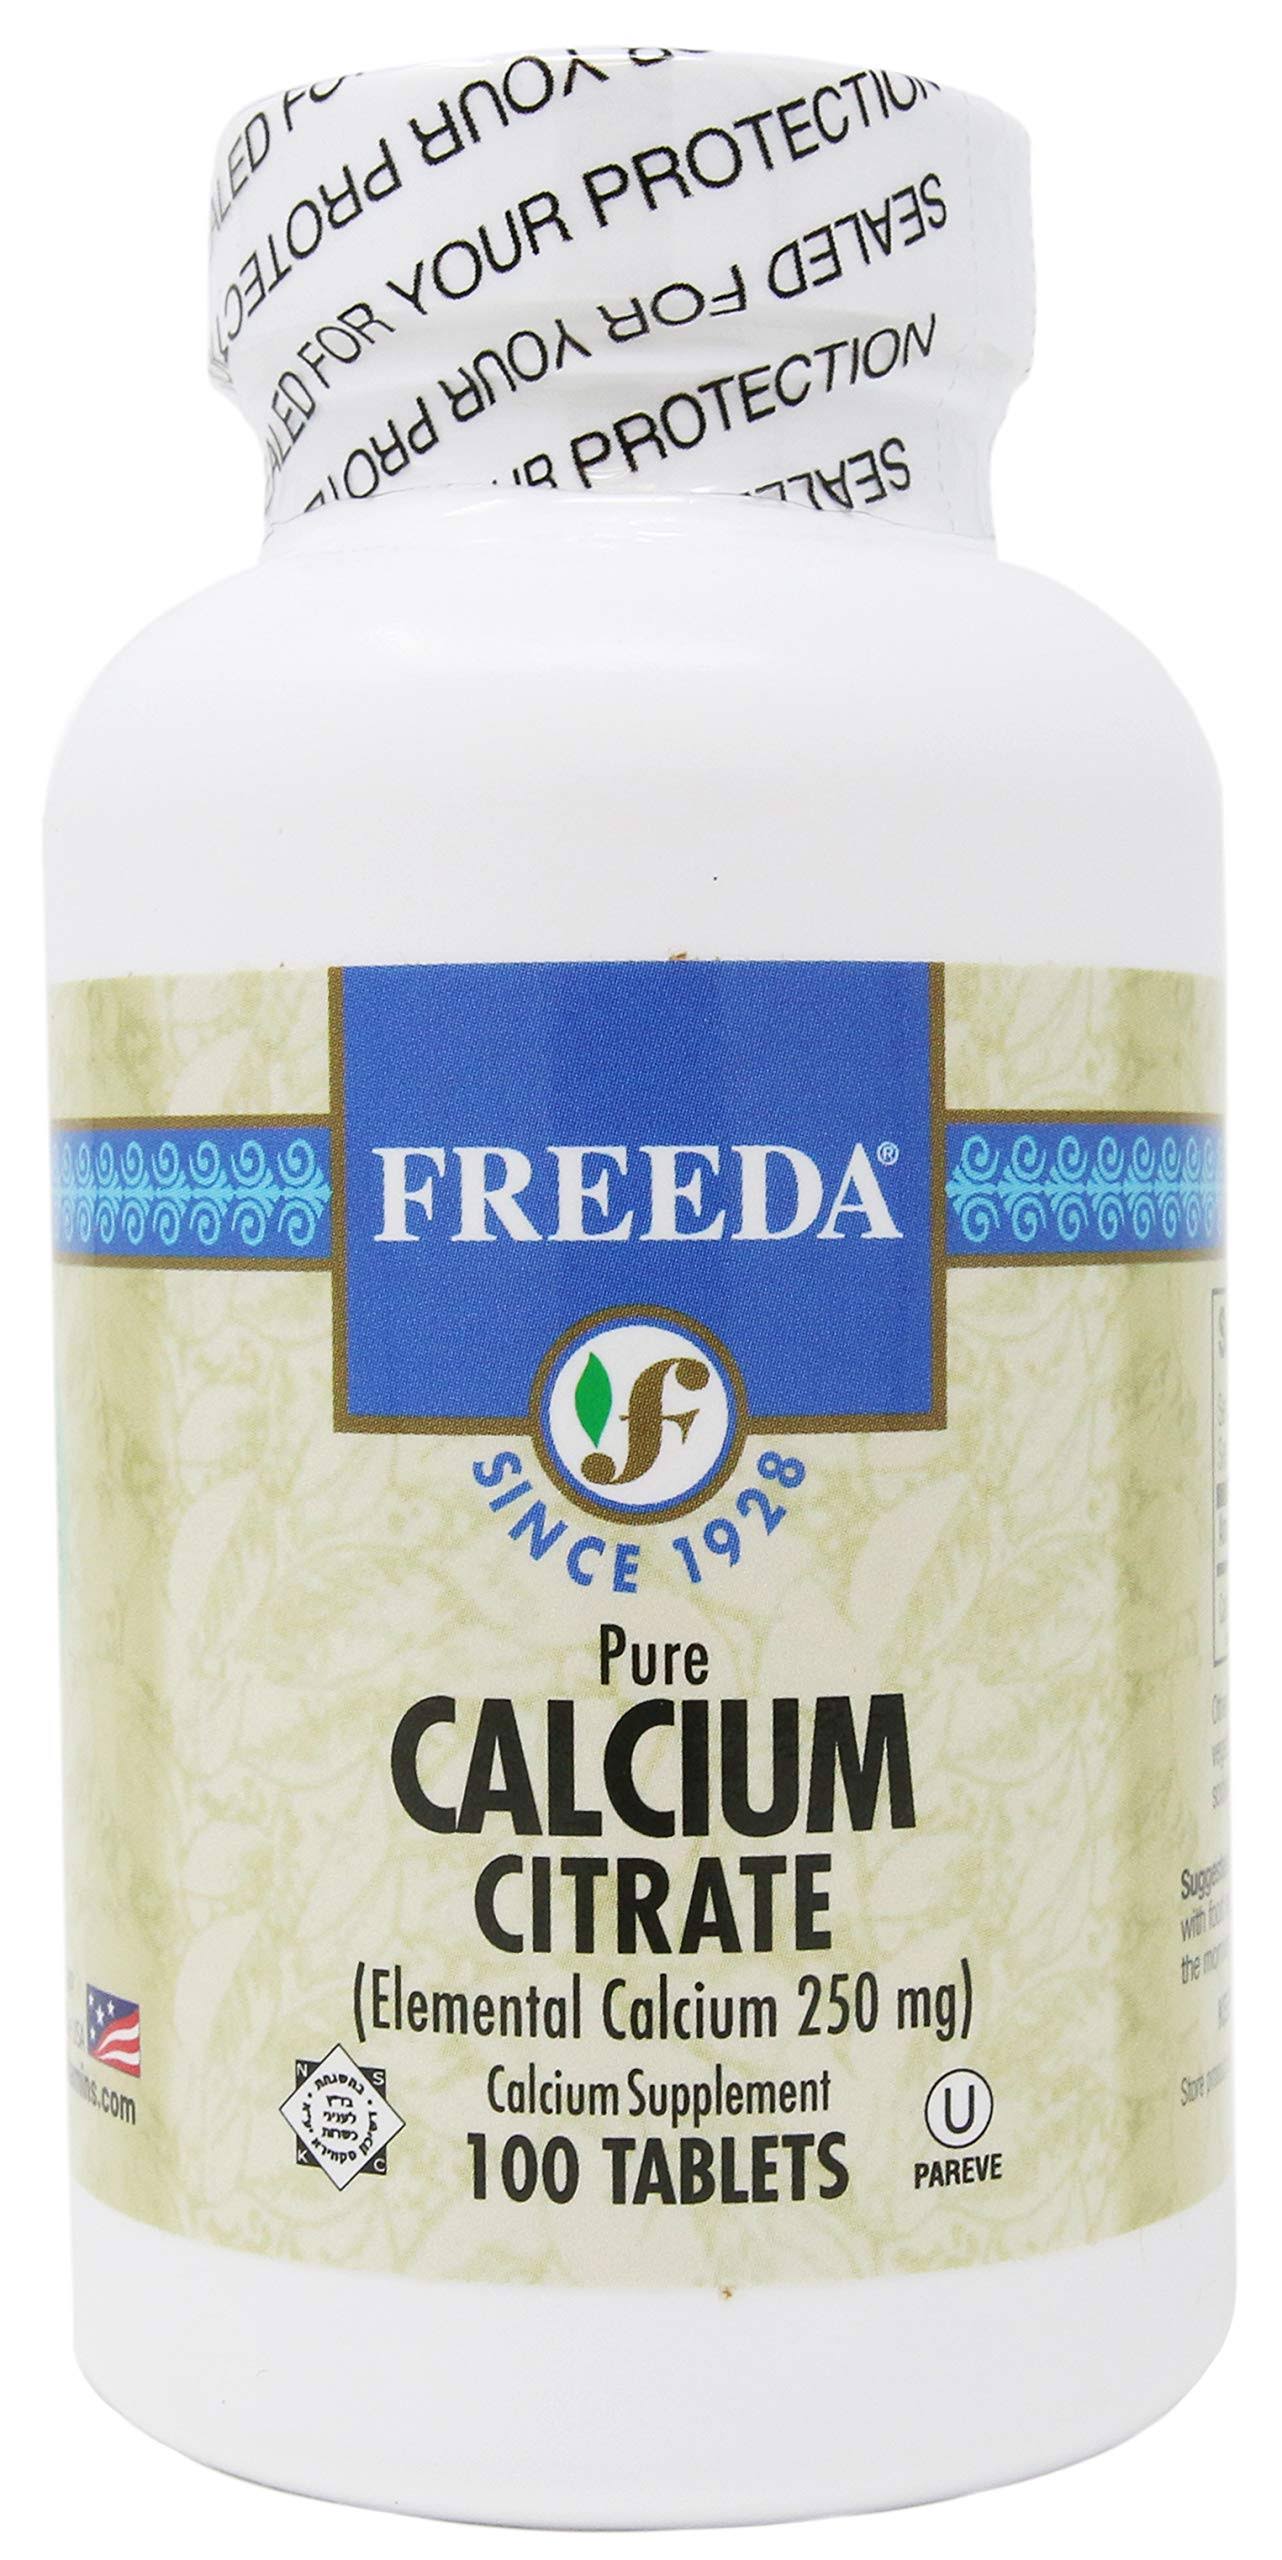 Freeda Pure Calcium Citrate Supplement - 250mg, 100ct